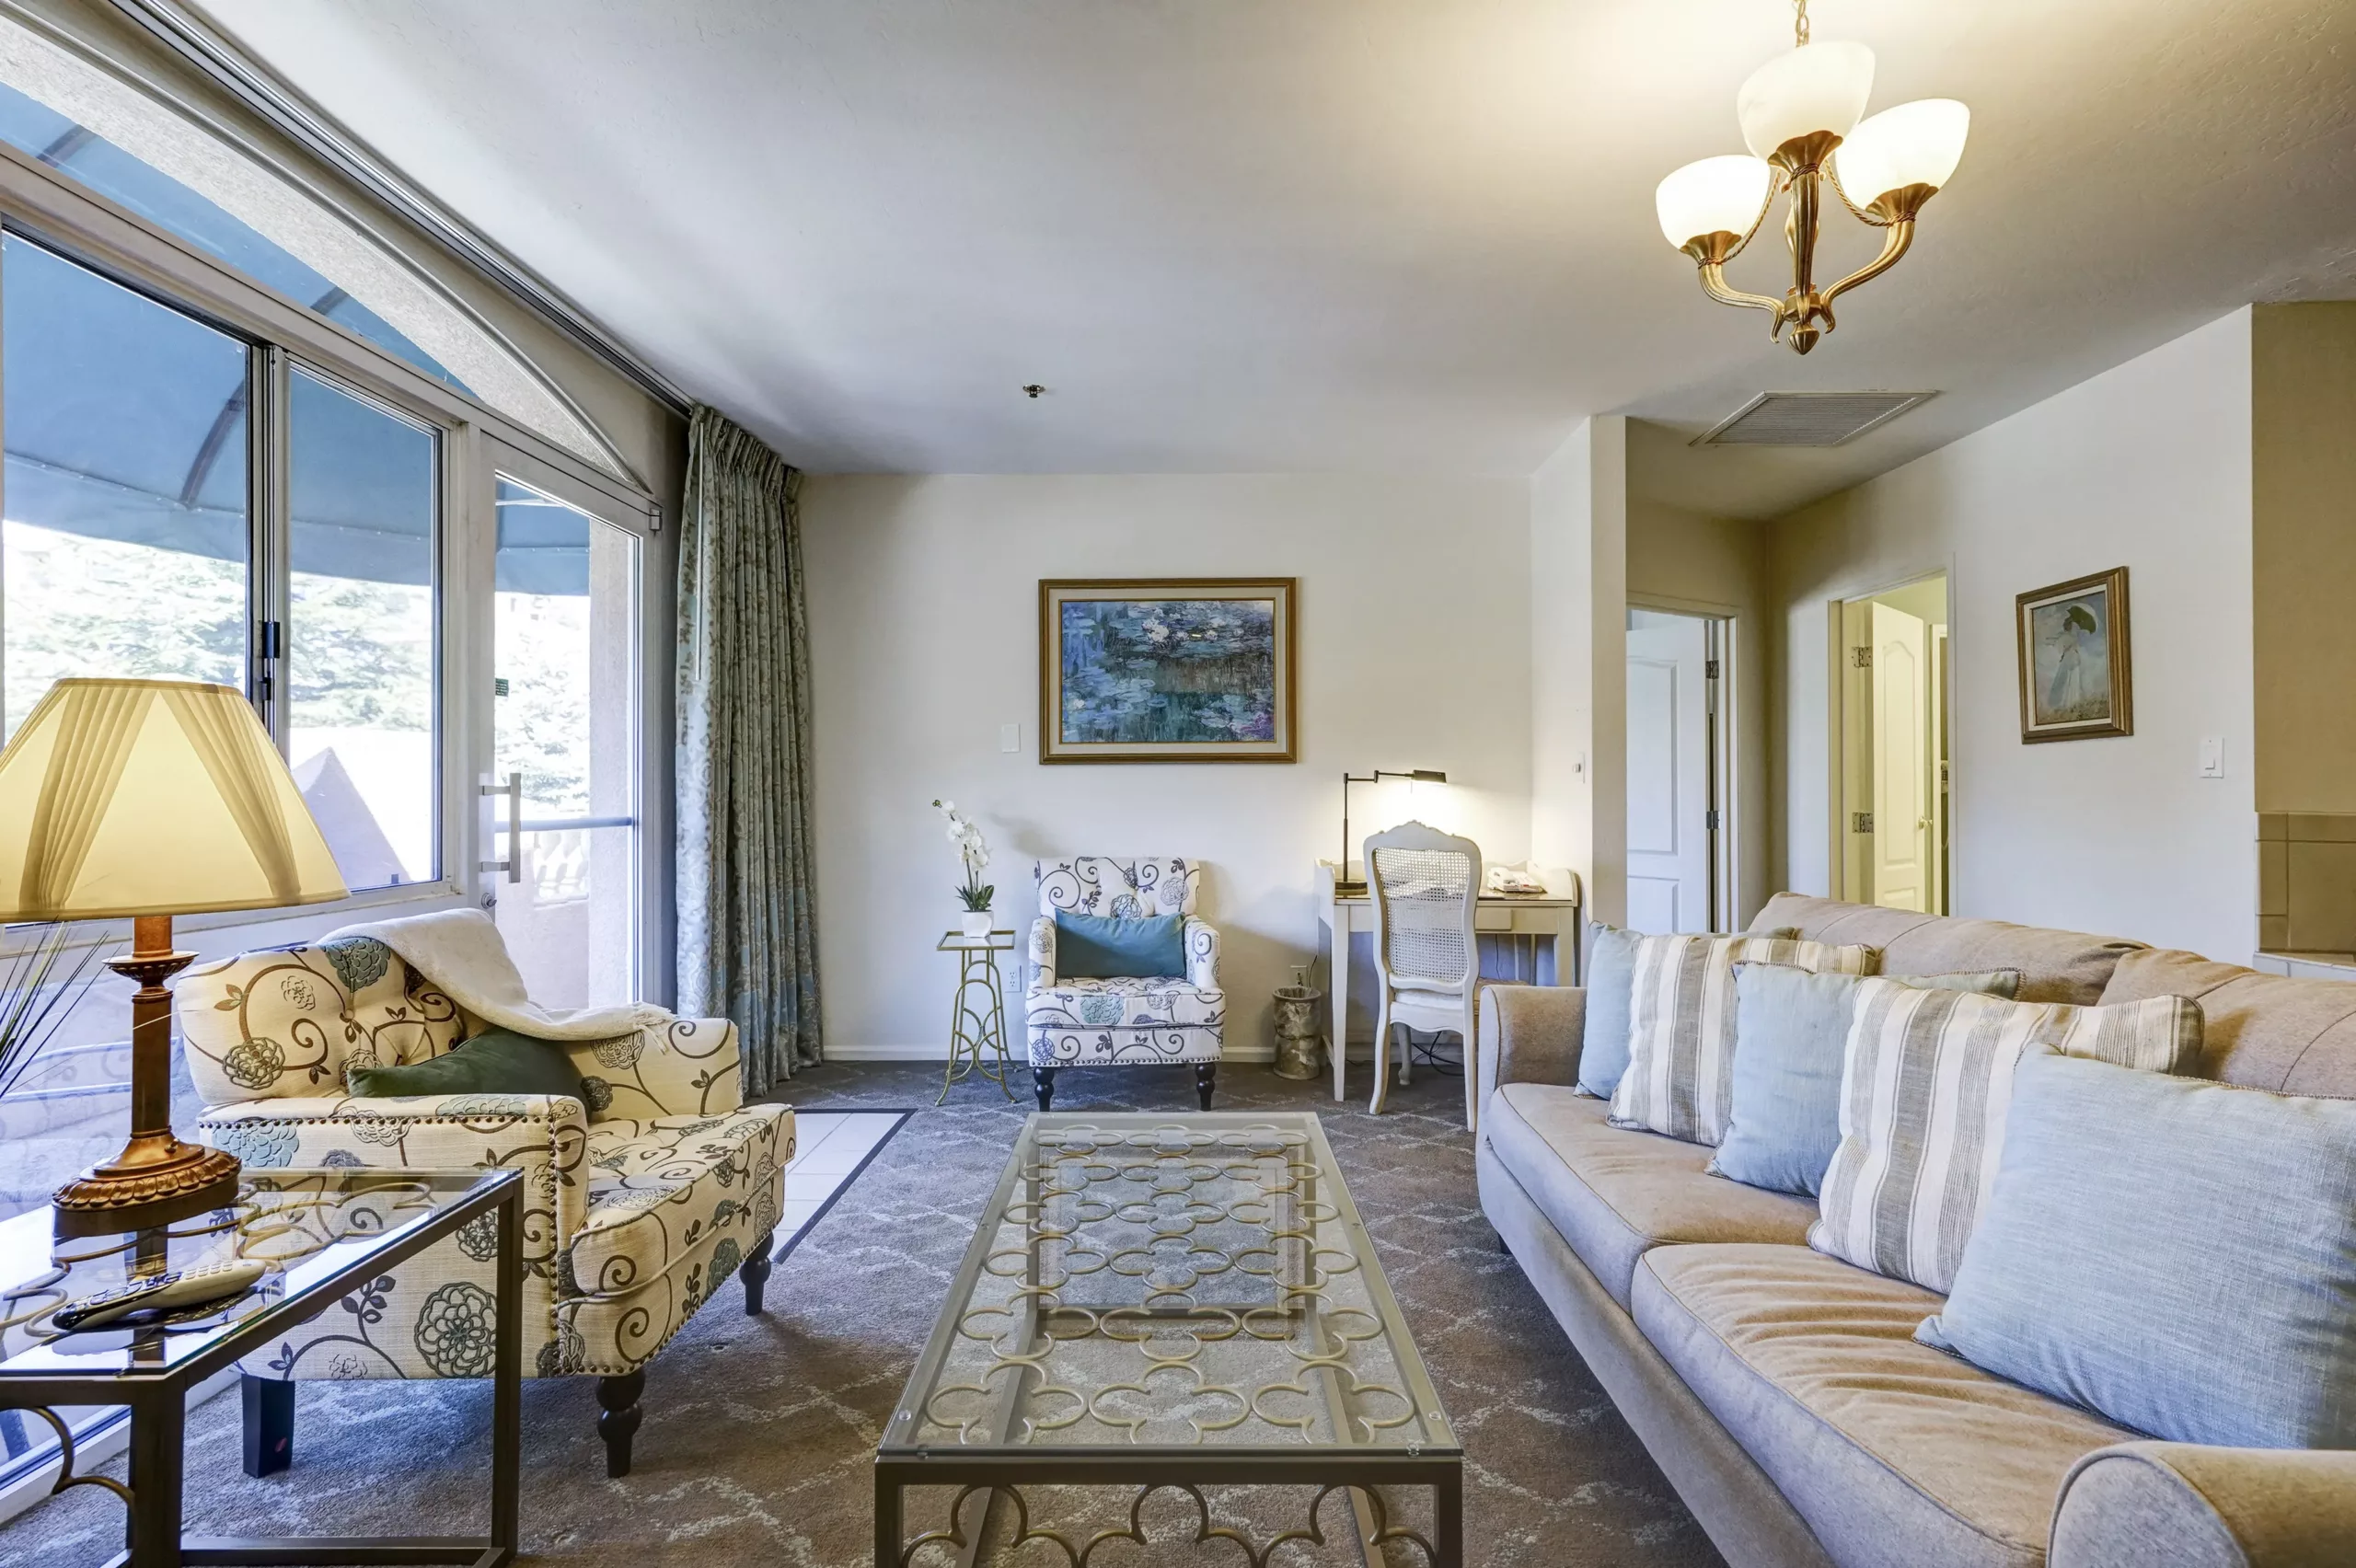 Forest Villas Hotel in Prescott Arizona - Luxury King Suite